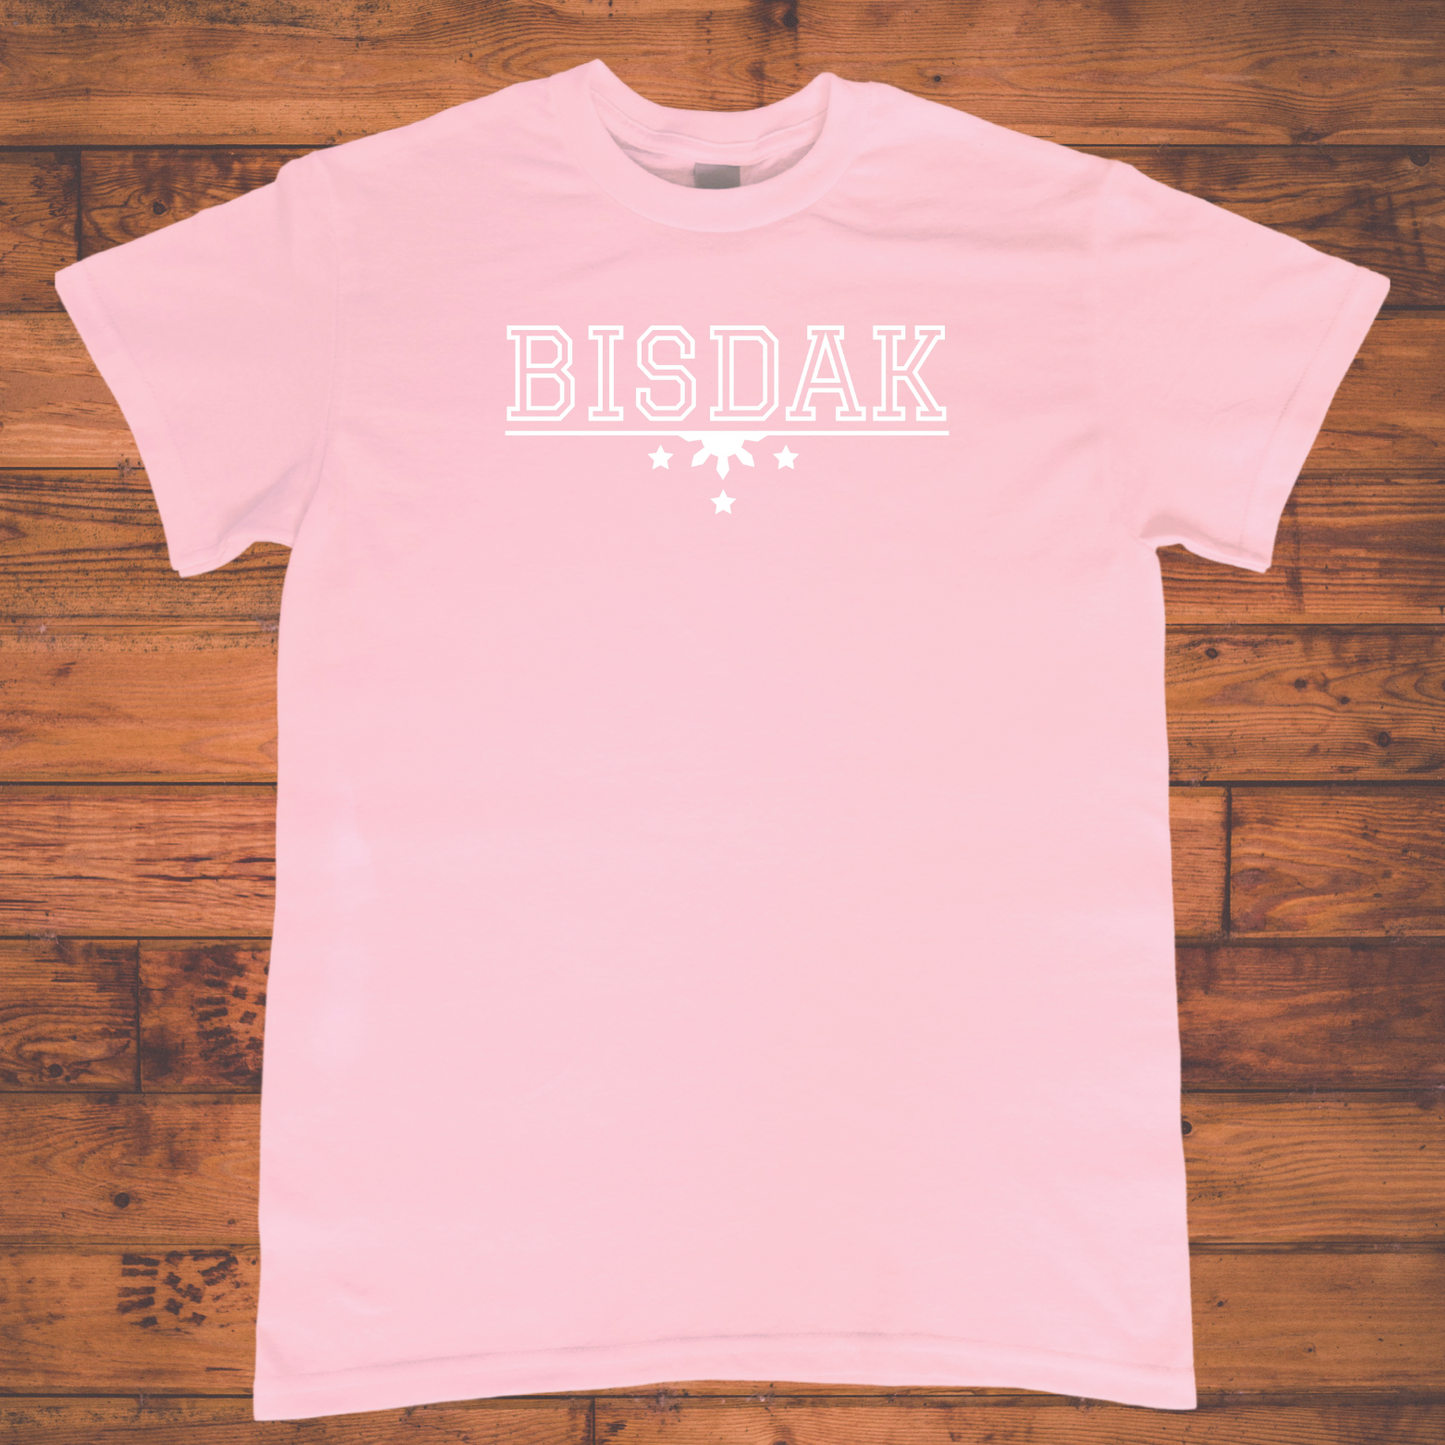 Bisdak T-shirt